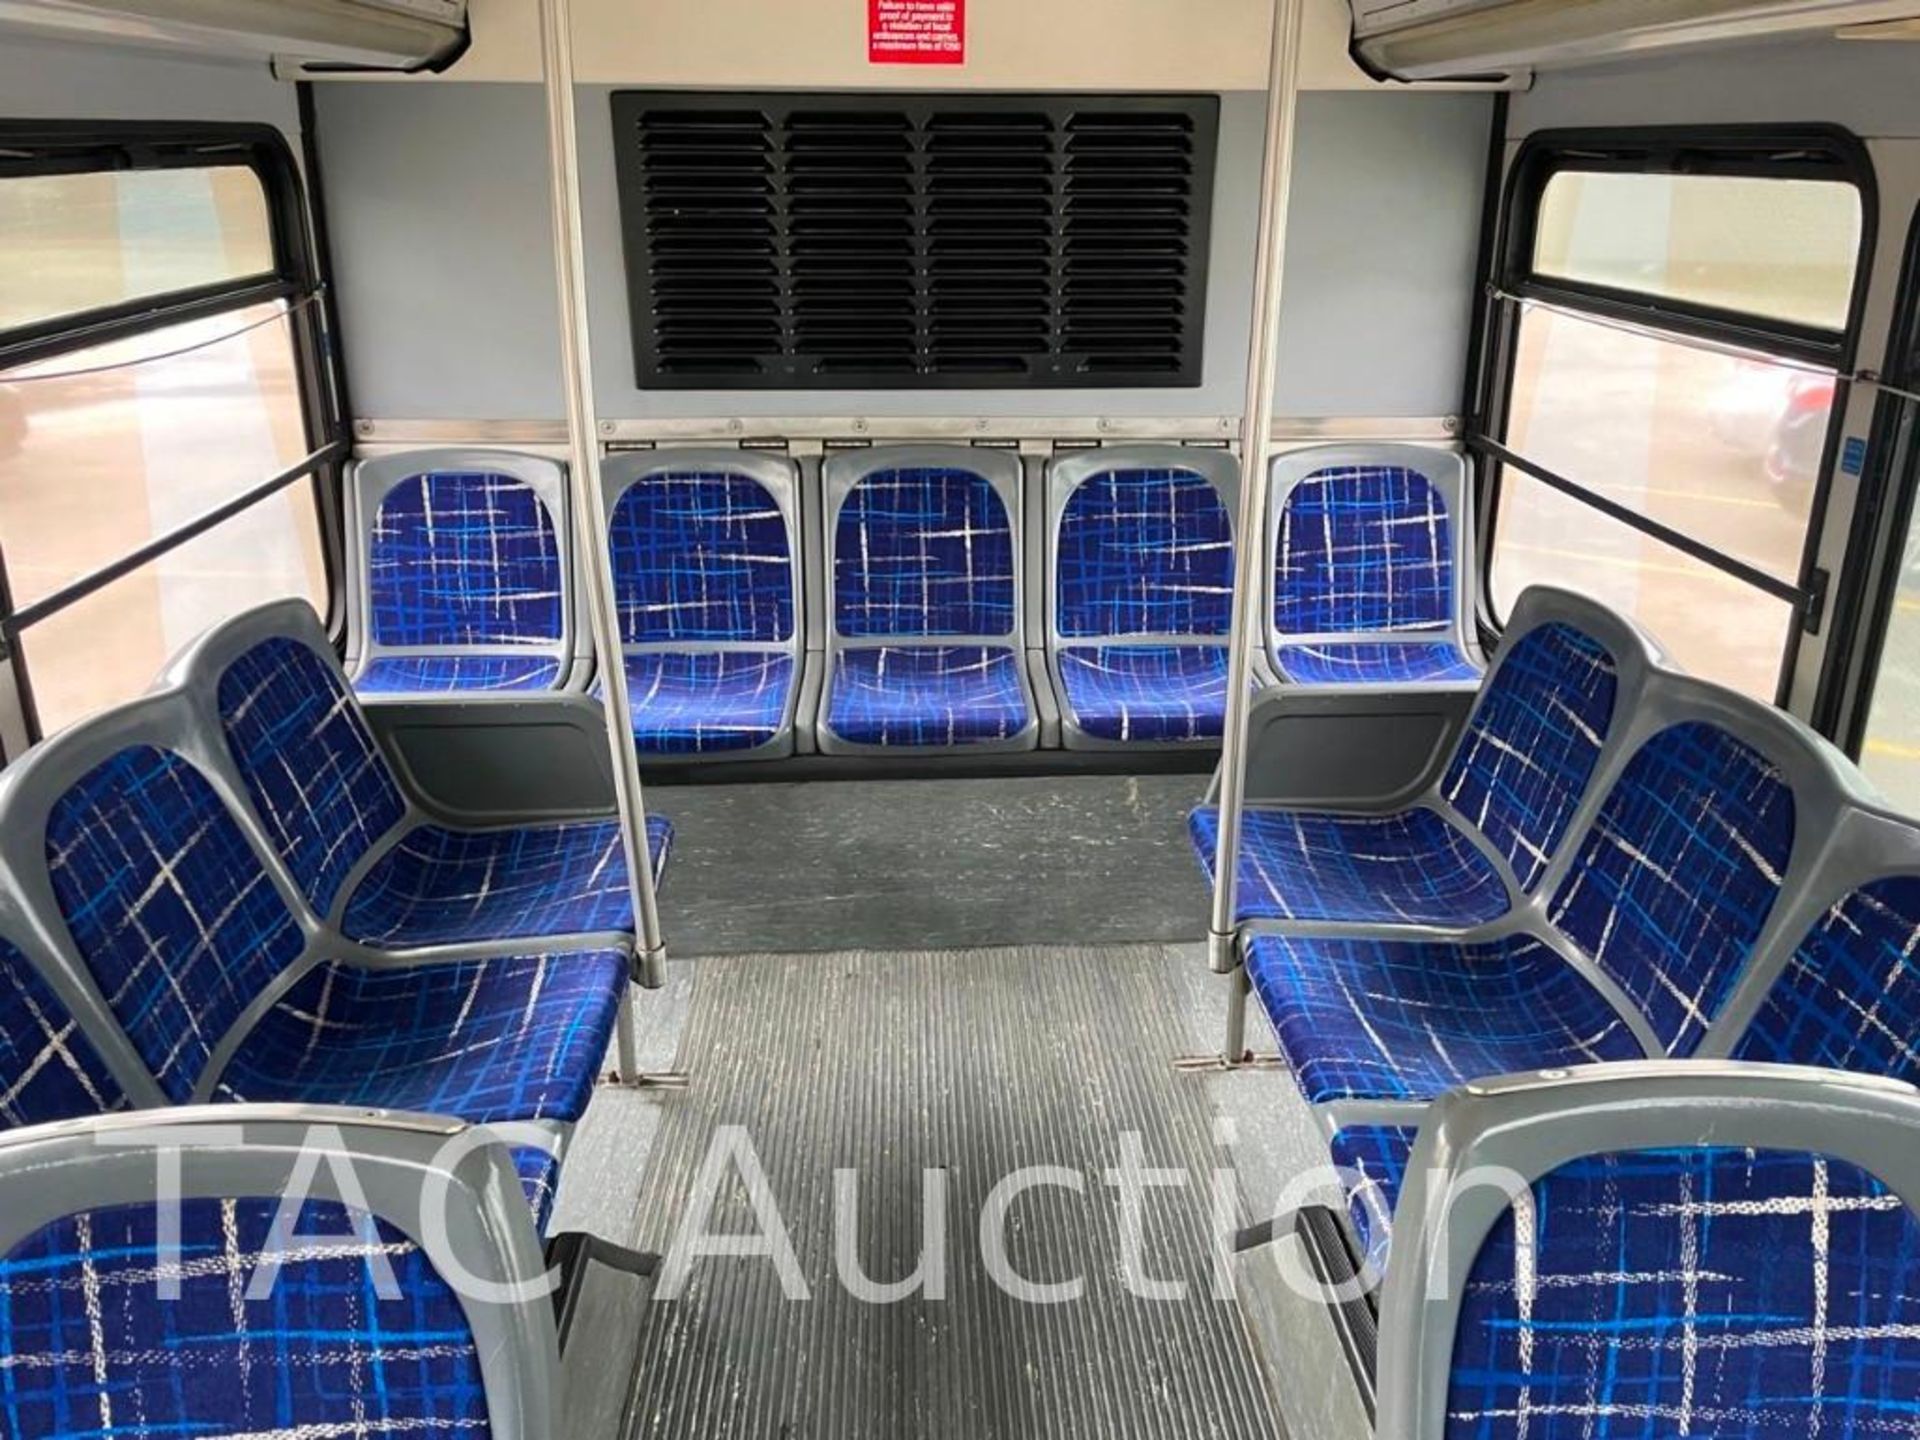 2005 Gillig Low Floor (40) Passenger Coach Transit Bus - Image 60 of 91